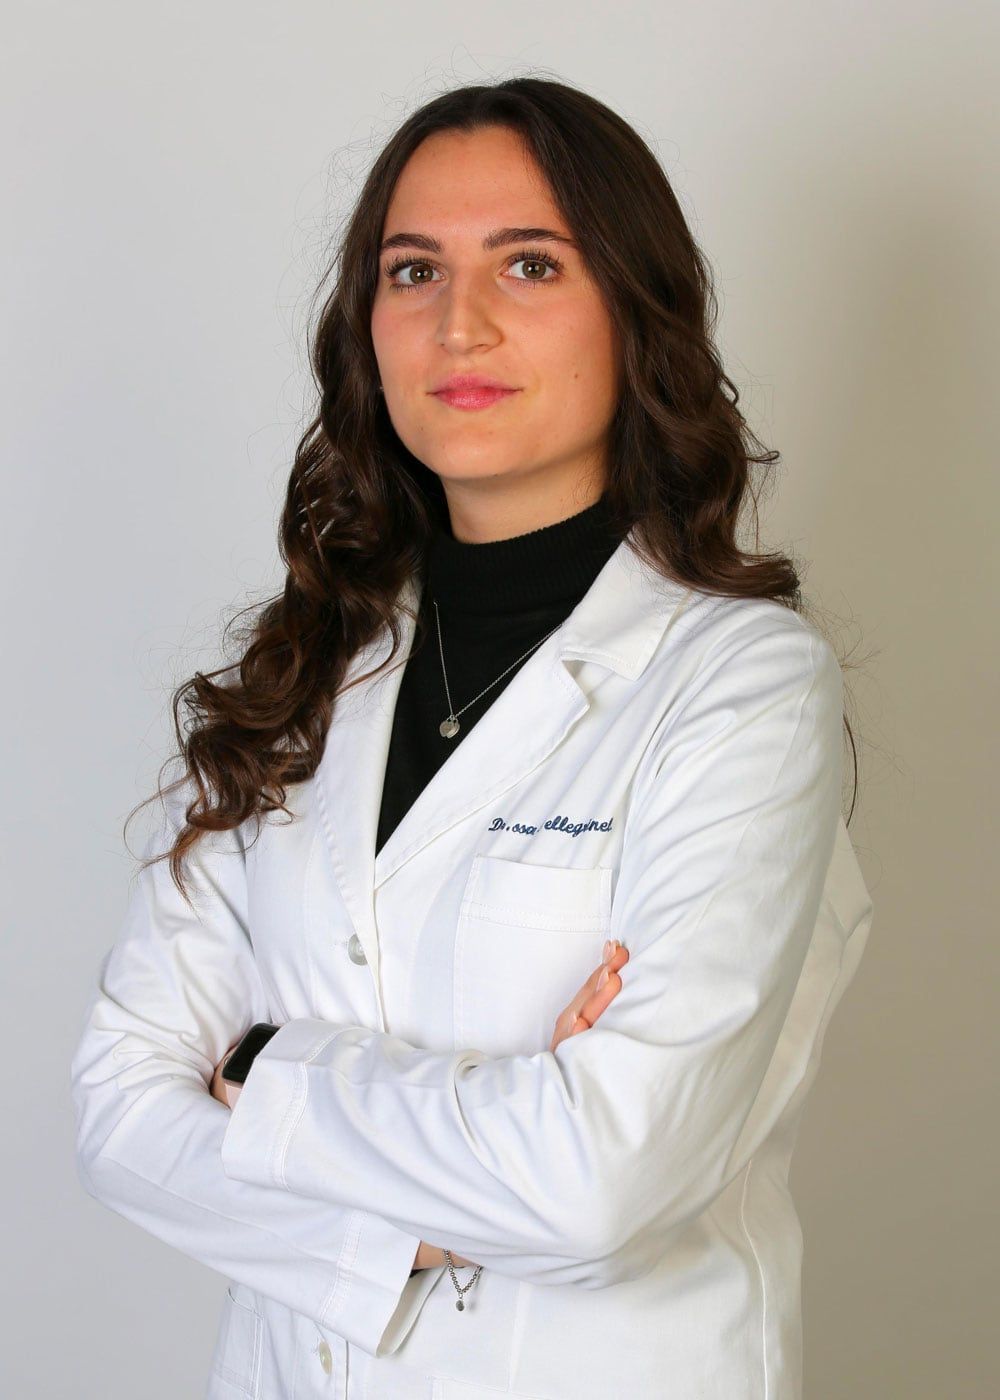 Dott.ssa Nadia Pellegrinelli